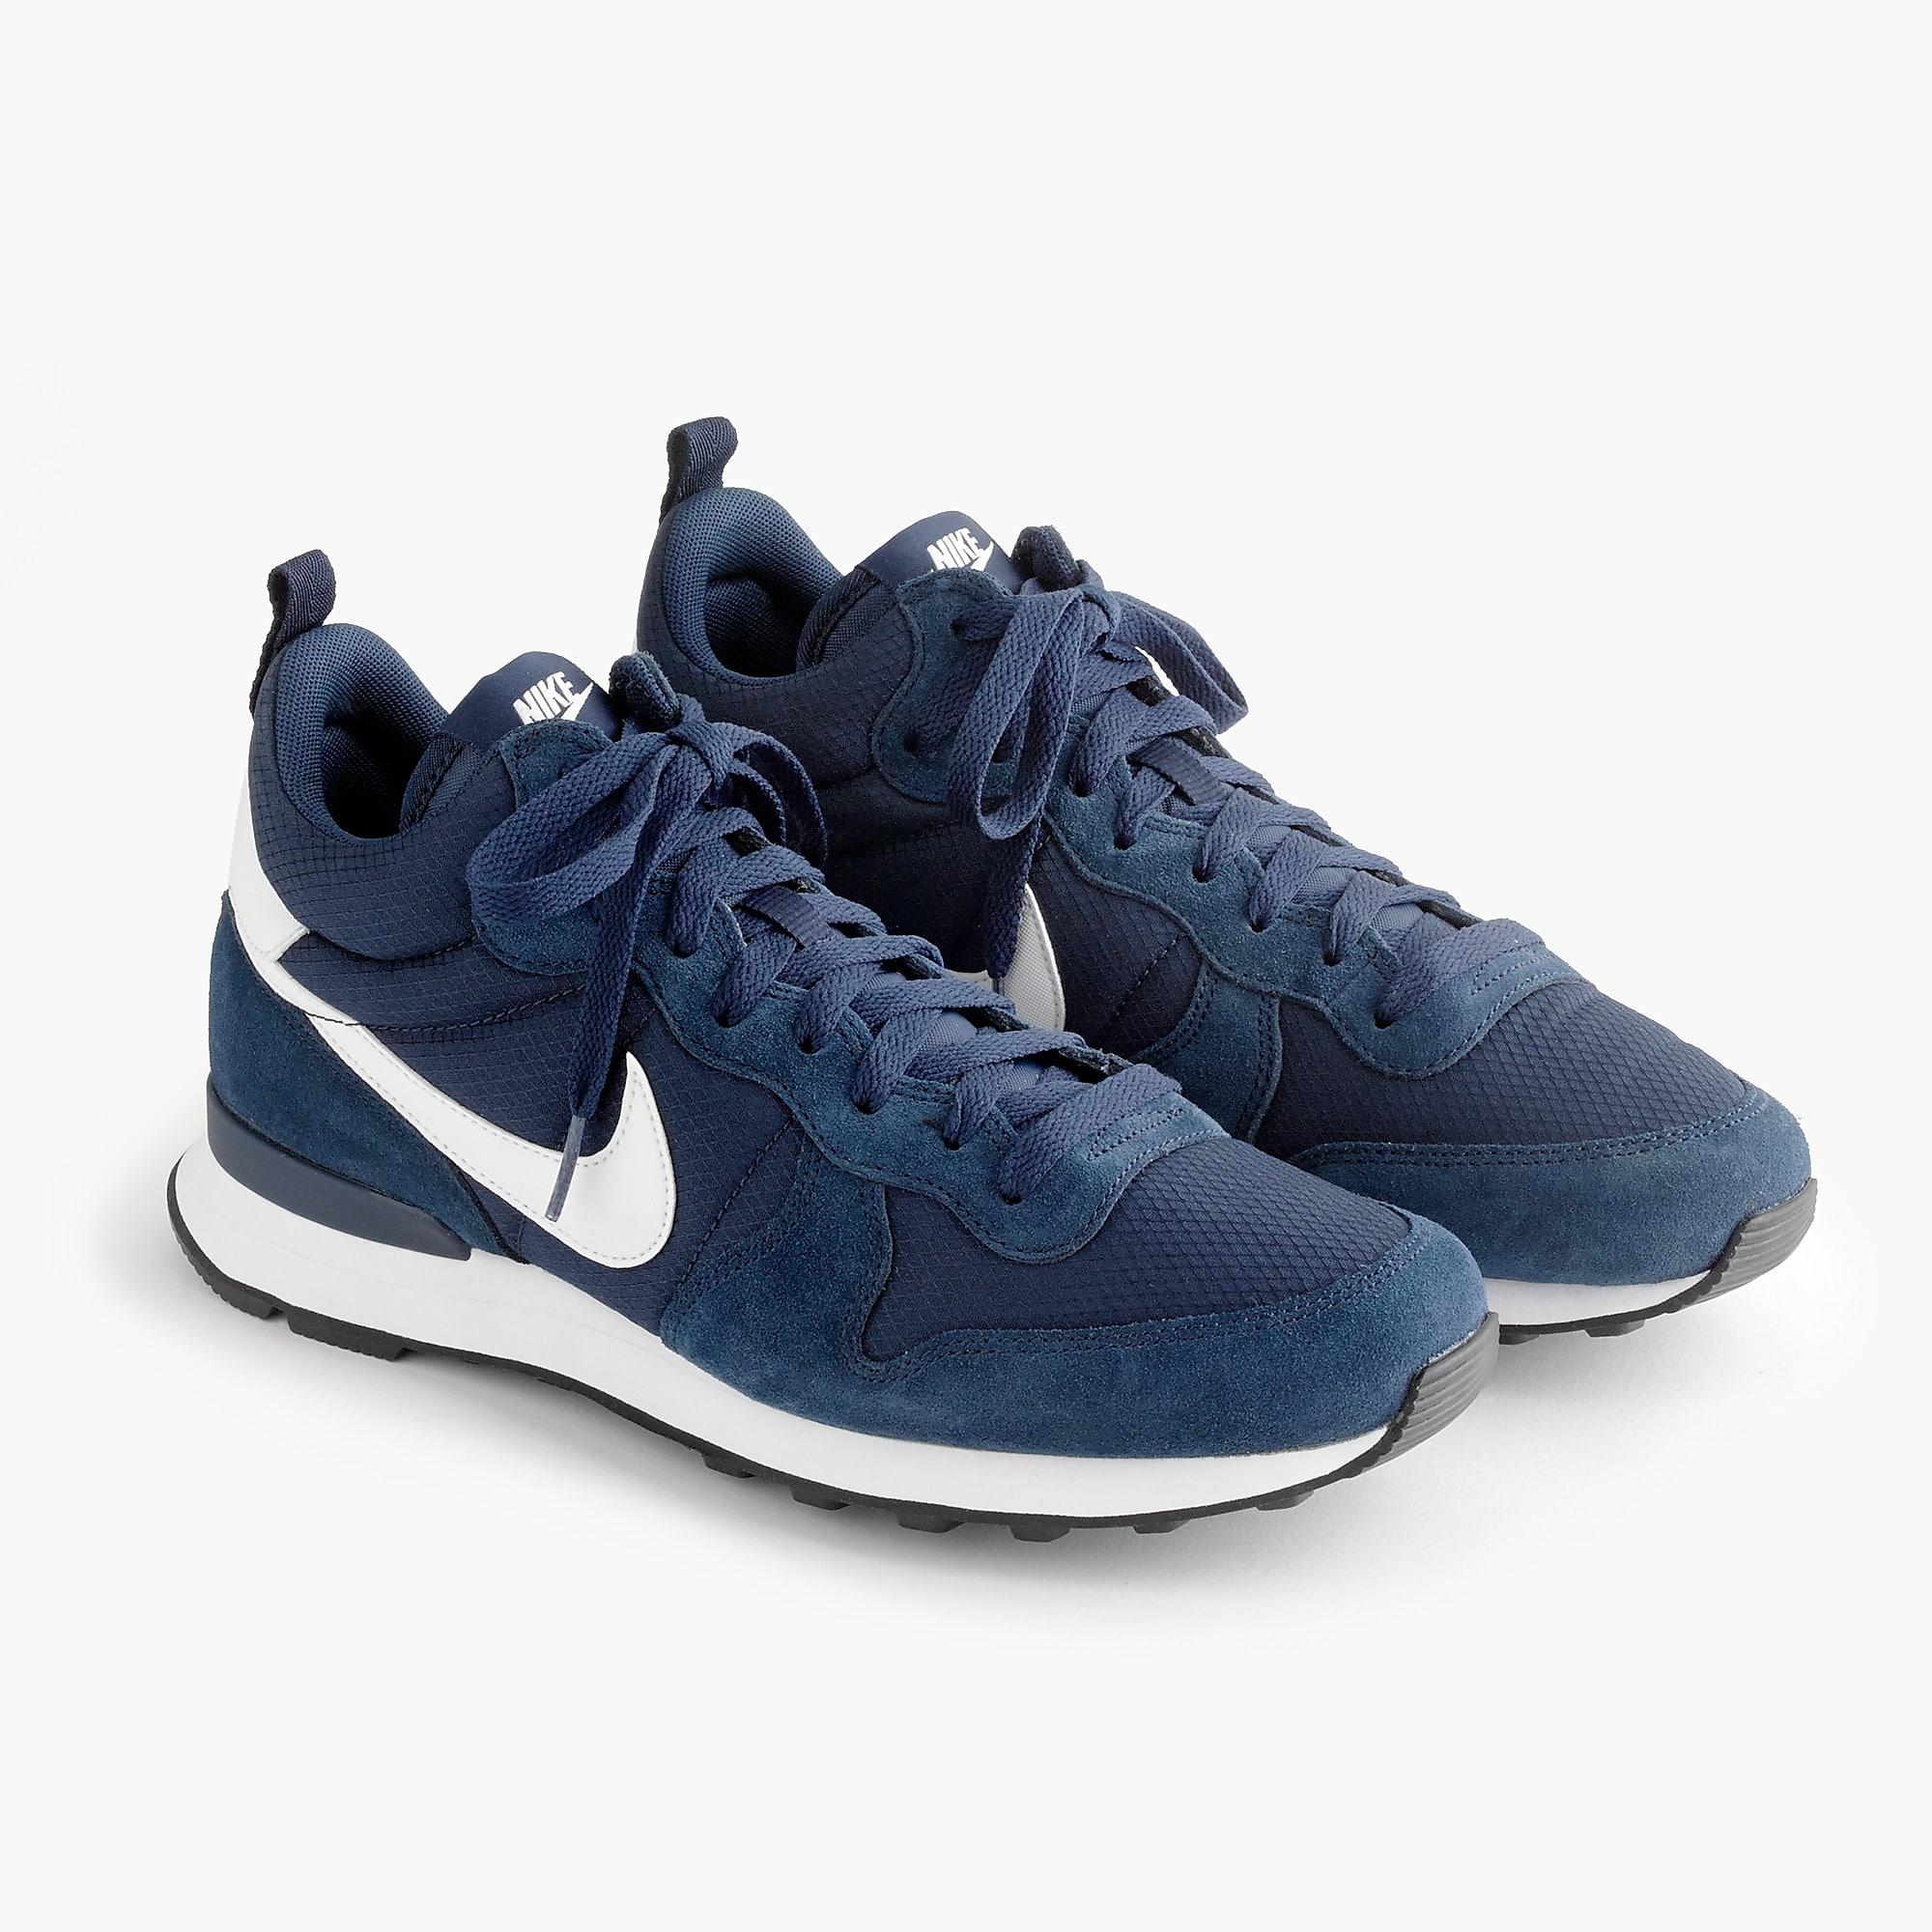 Nike Internationalist Mid Sneakers In Navy in Blue for Men - Lyst